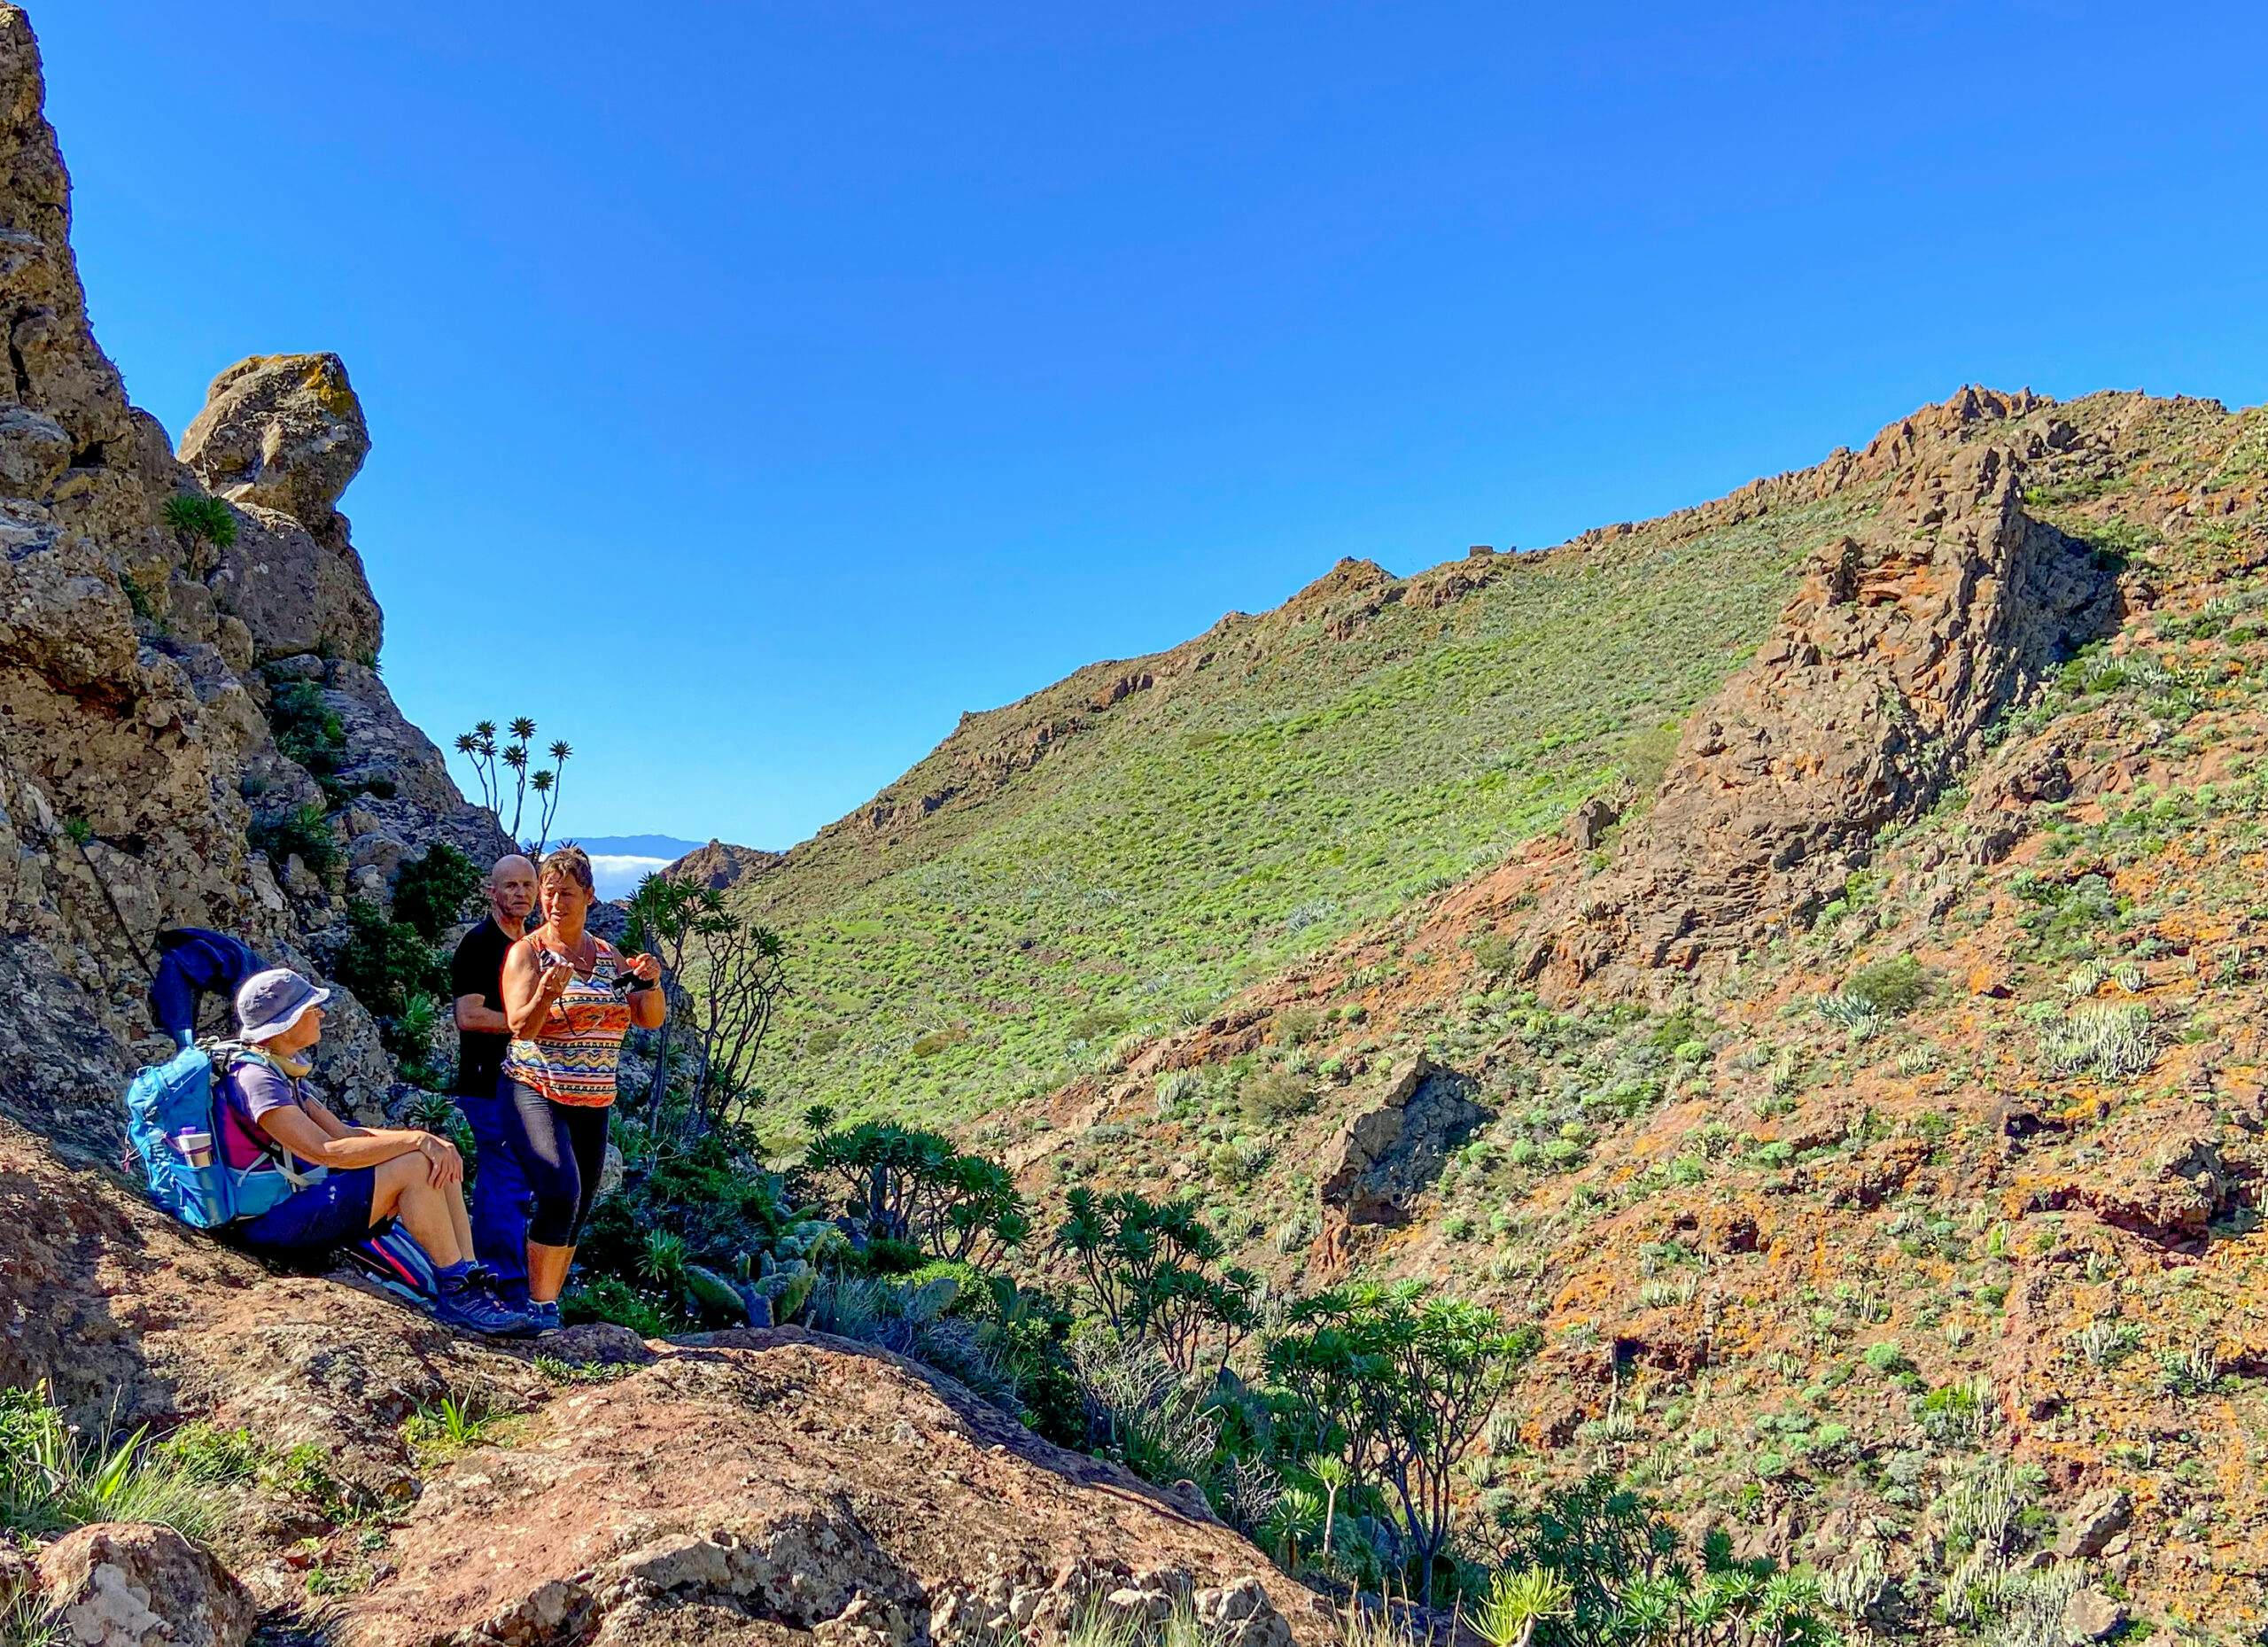 Rest on a mountain ridge - La Gomera in the background